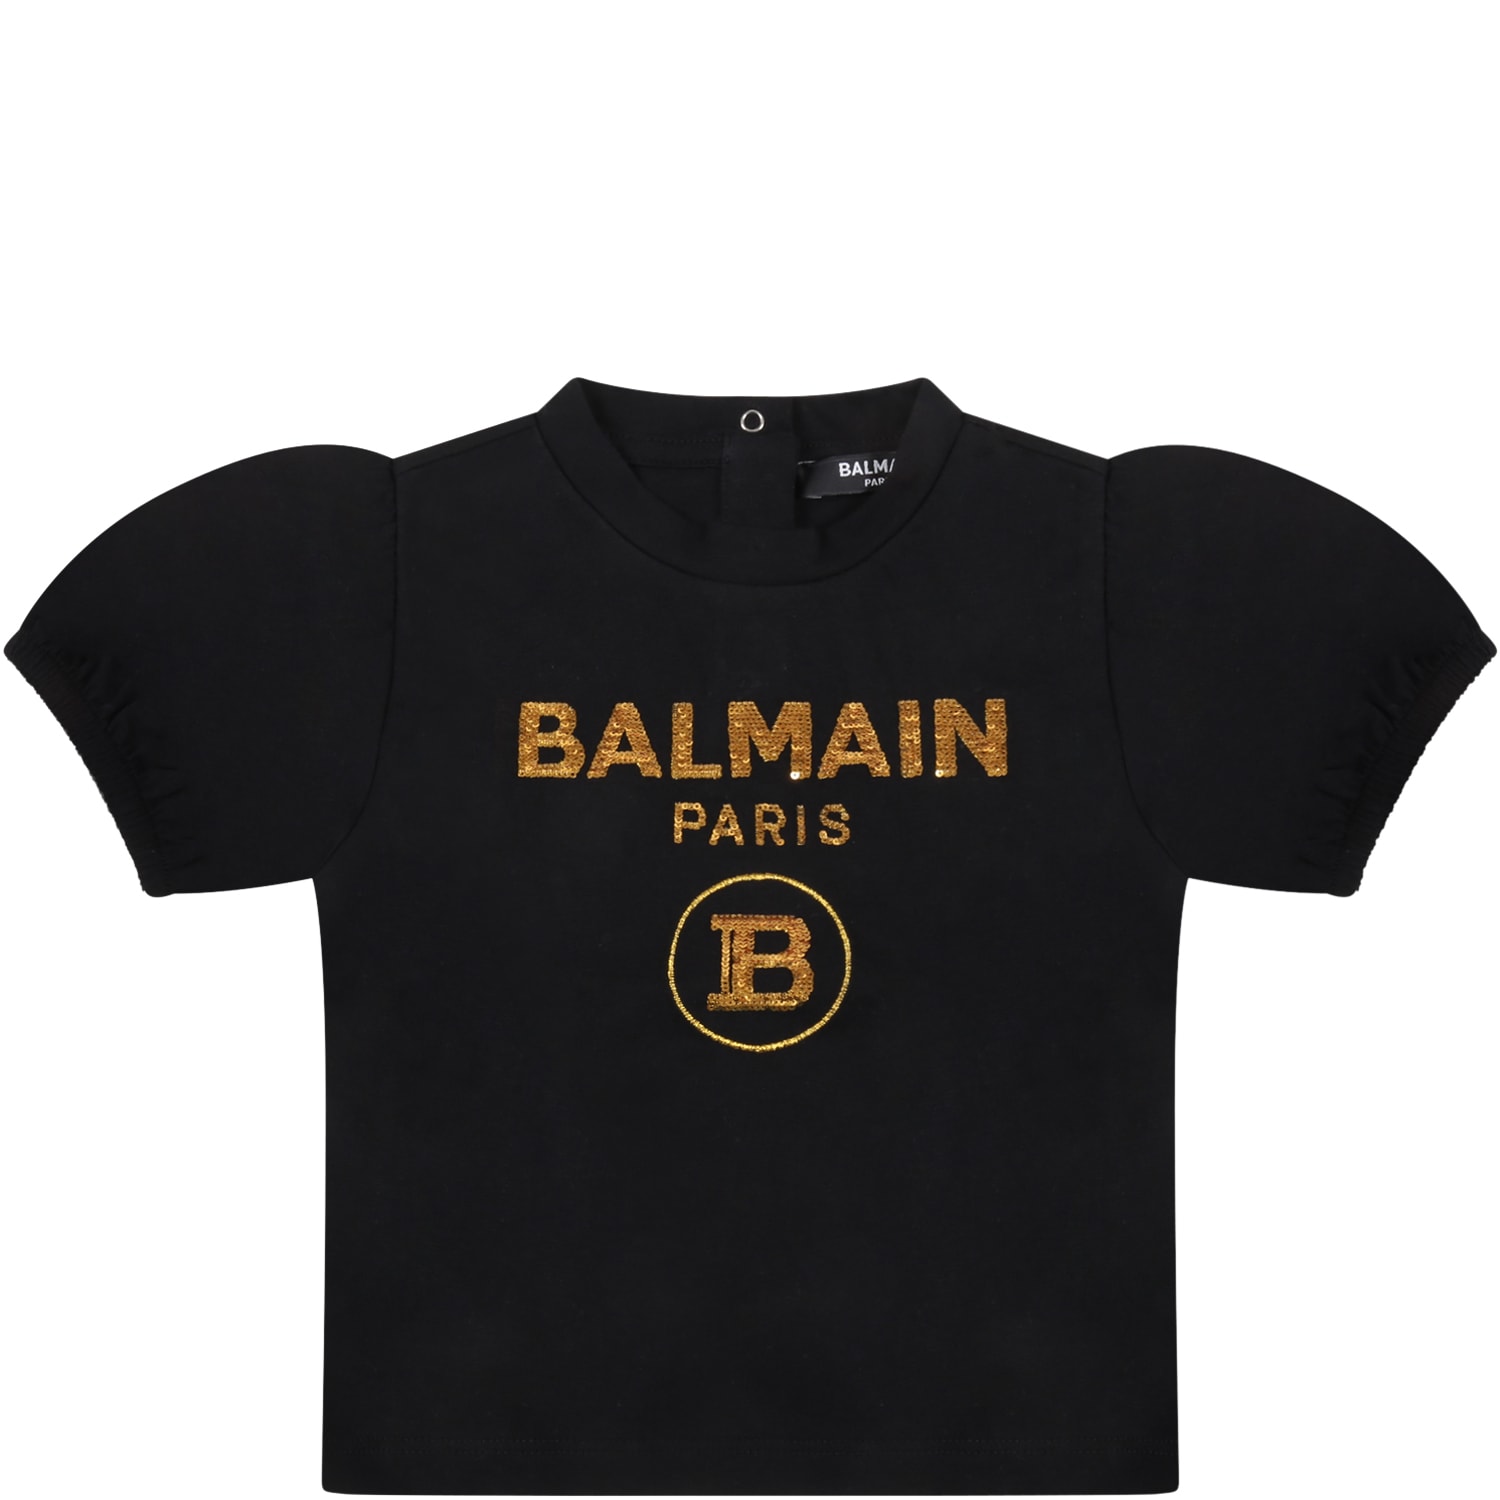 Balmain Black T-shirt For Baby Girl With Gold Logo